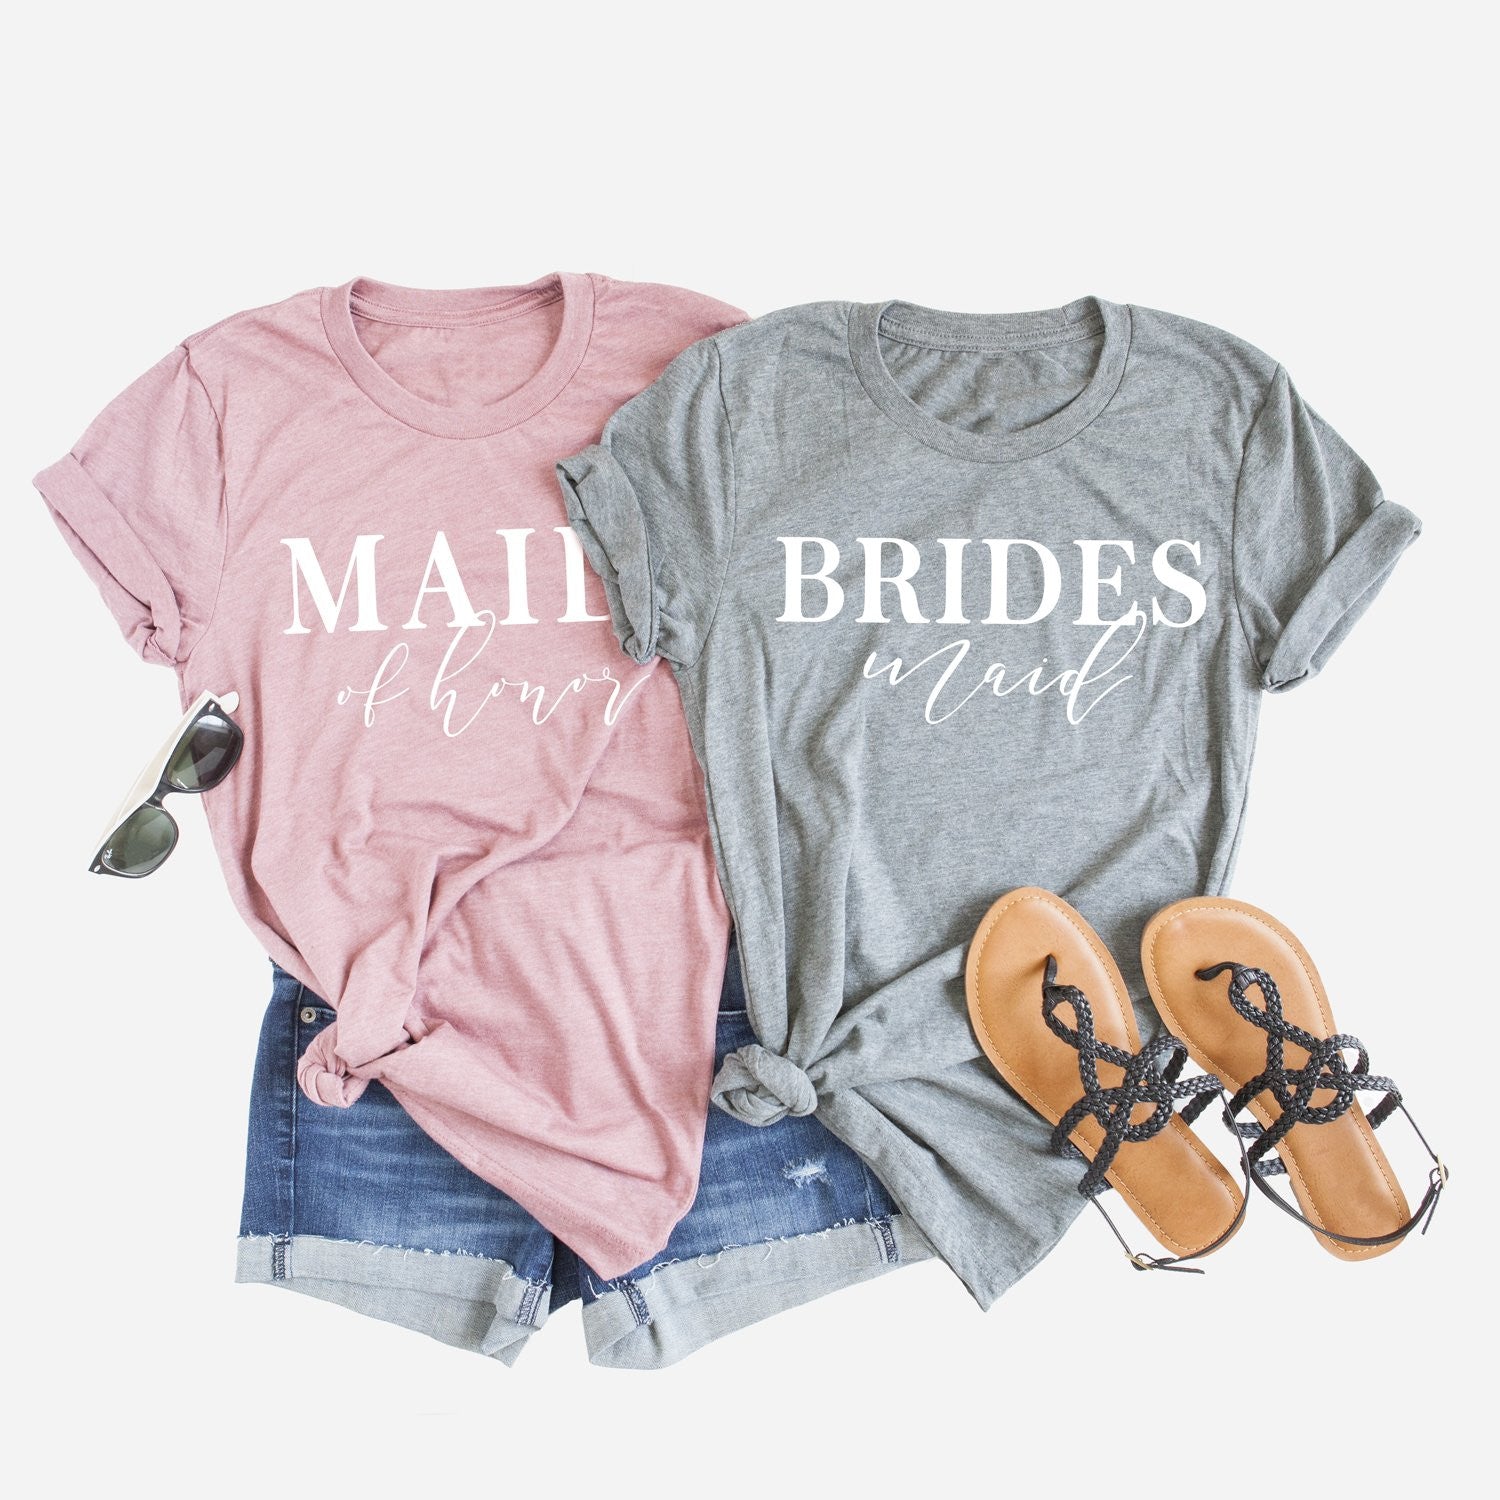 bridal party shirts ideas